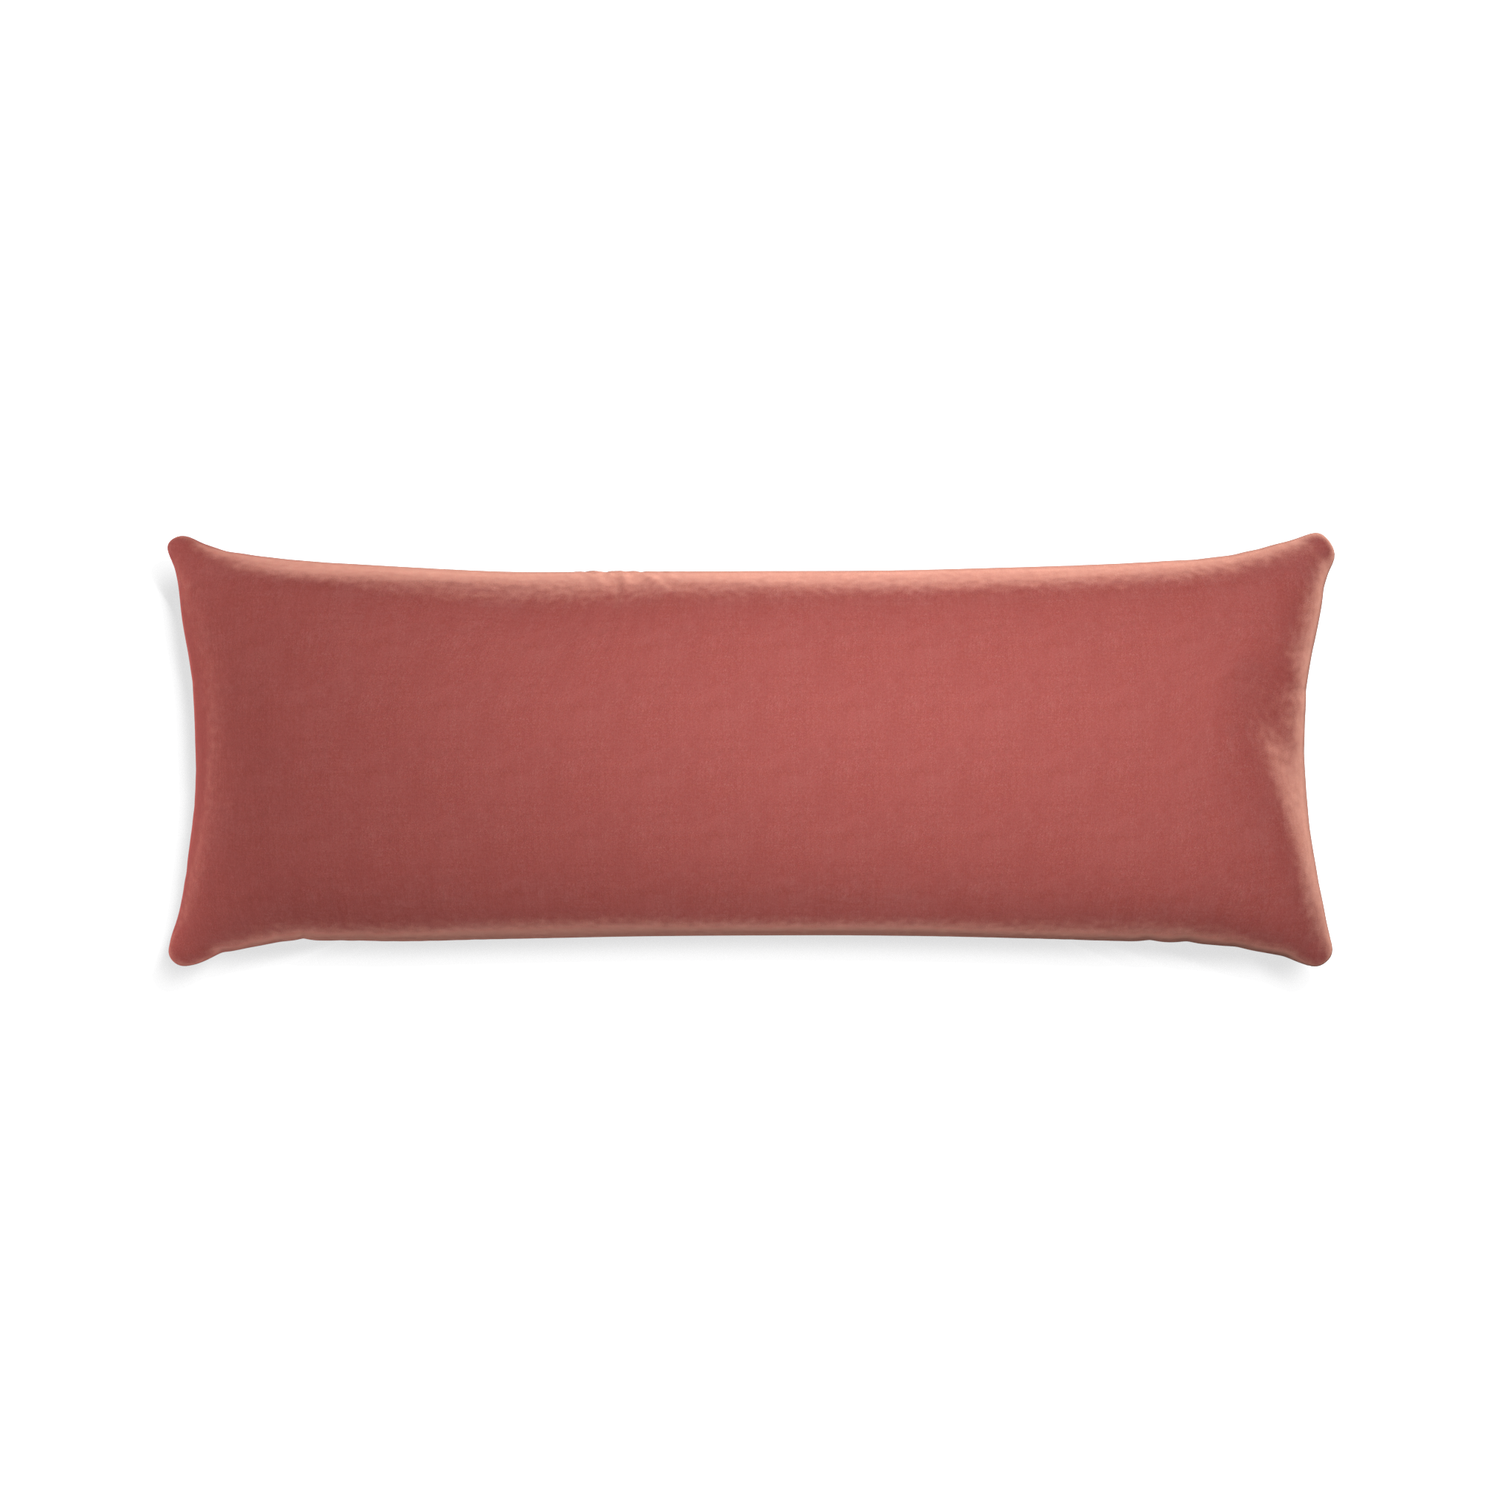 Xl-lumbar cosmo velvet custom pillow with none on white background